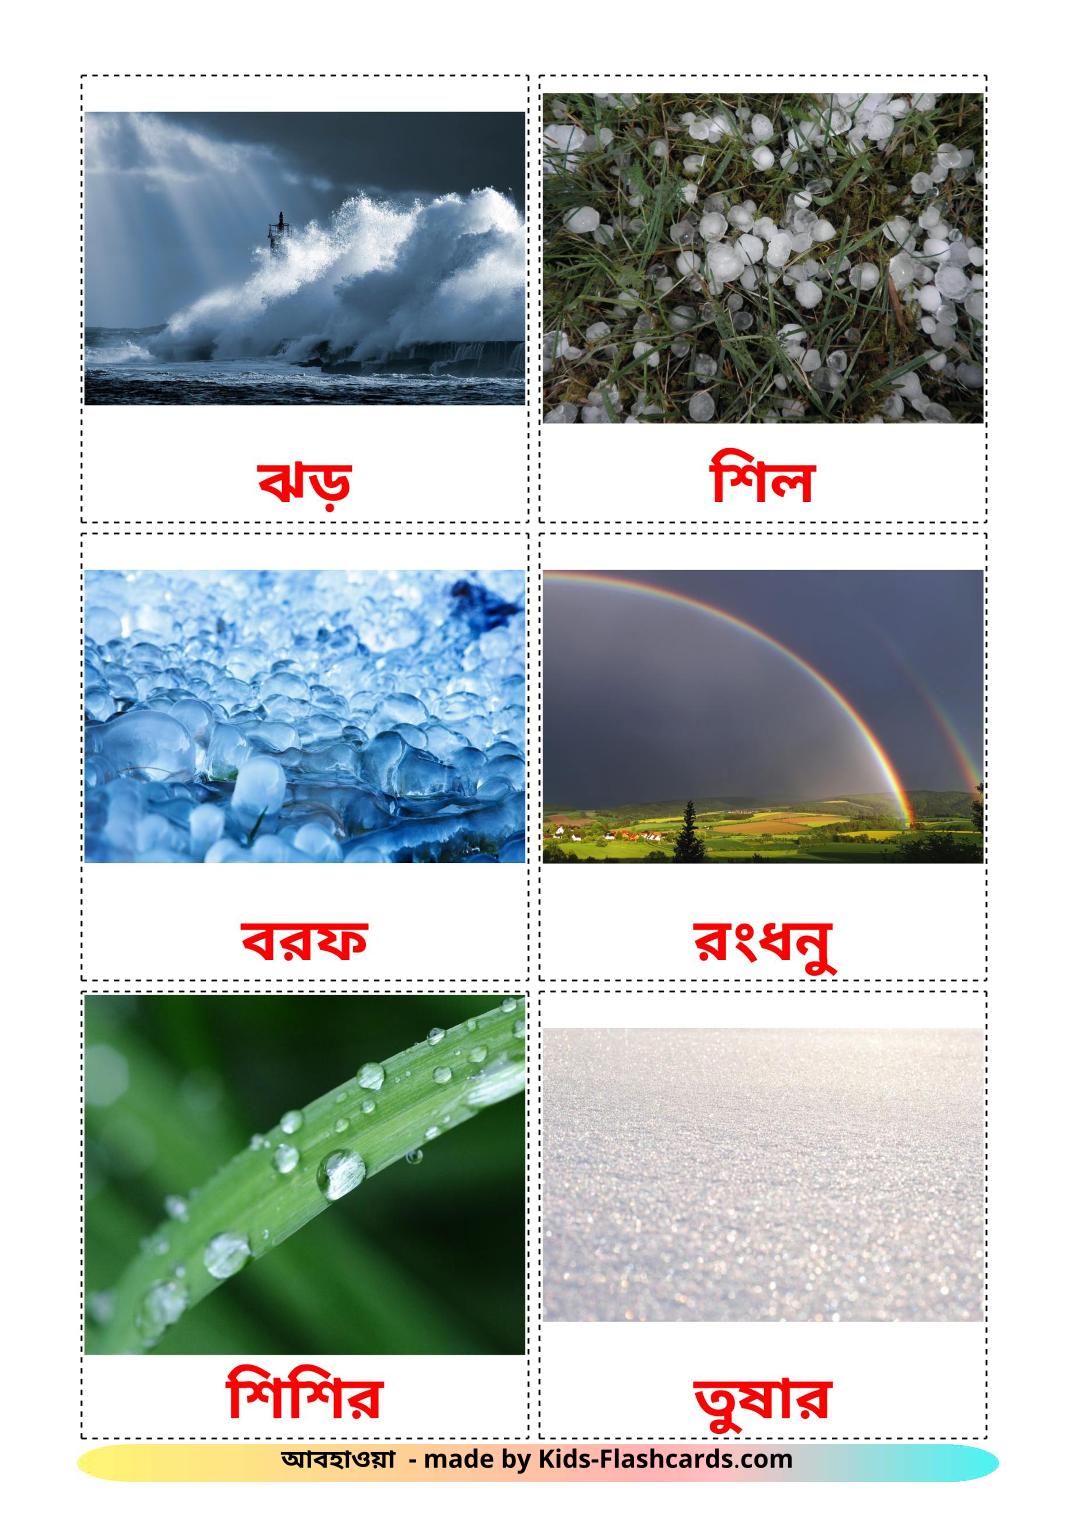 Tempo atmosferico - 31 flashcards bengalese stampabili gratuitamente